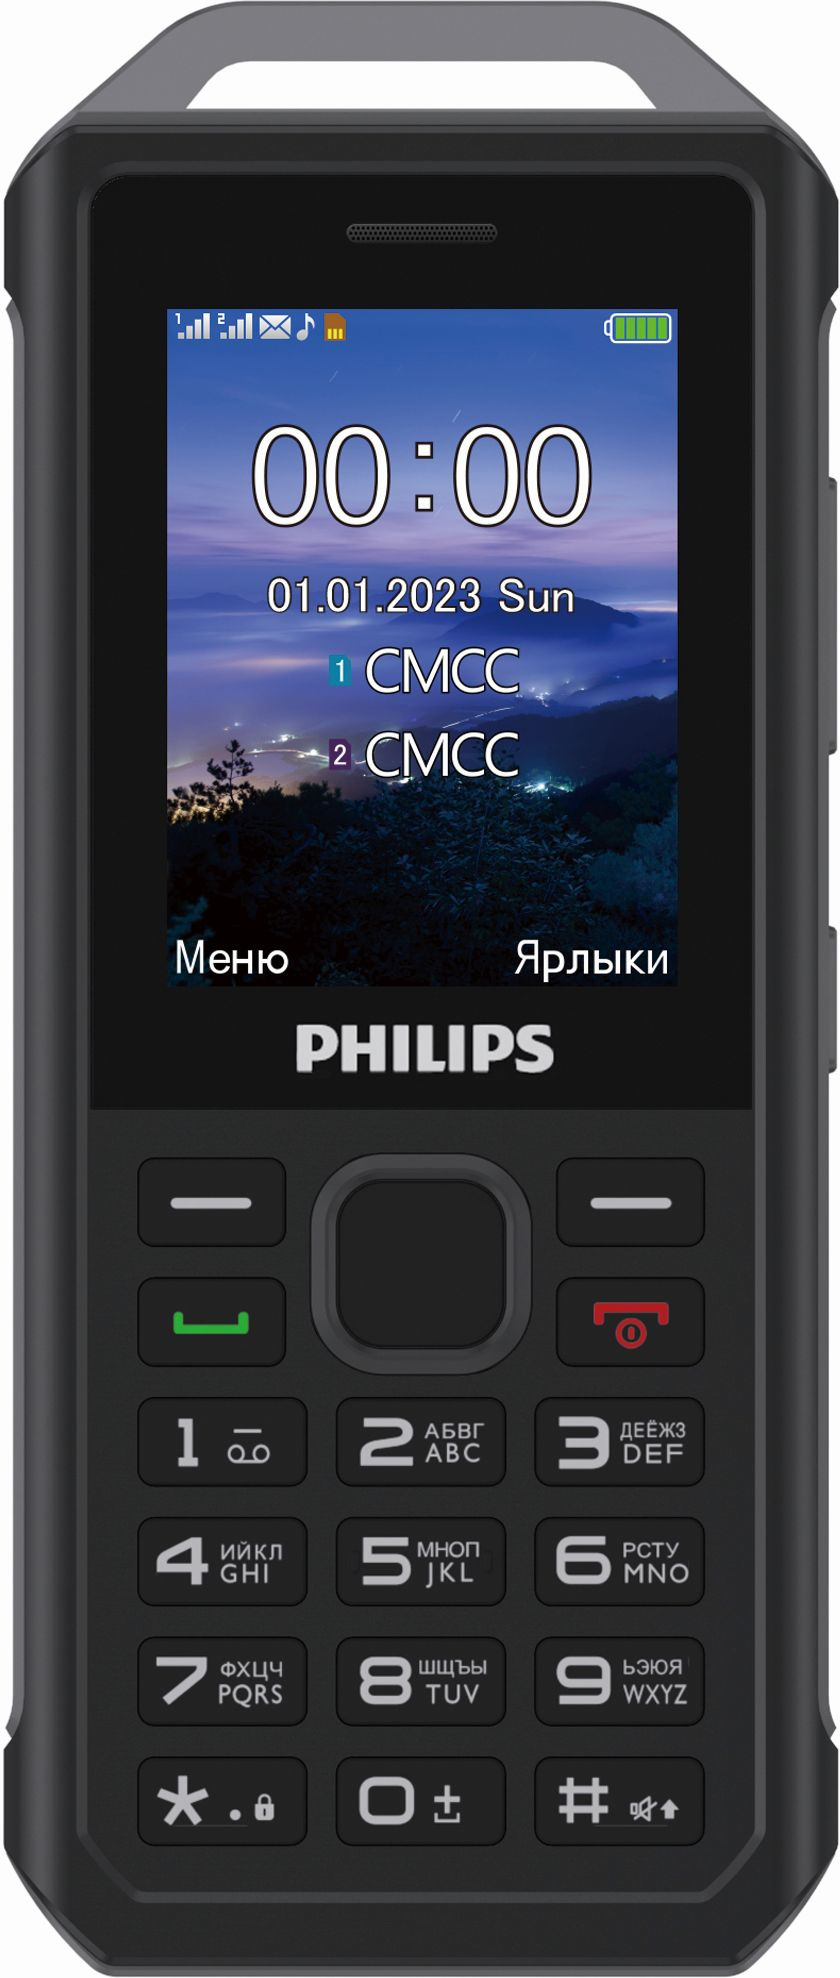 Мобильный телефон Philips E2317 Xenium темно-серый моноблок 2Sim 2.4" 240x320 Nucleus 0.3Mpix GSM900/1800 MP3 FM microSDHC max32Gb